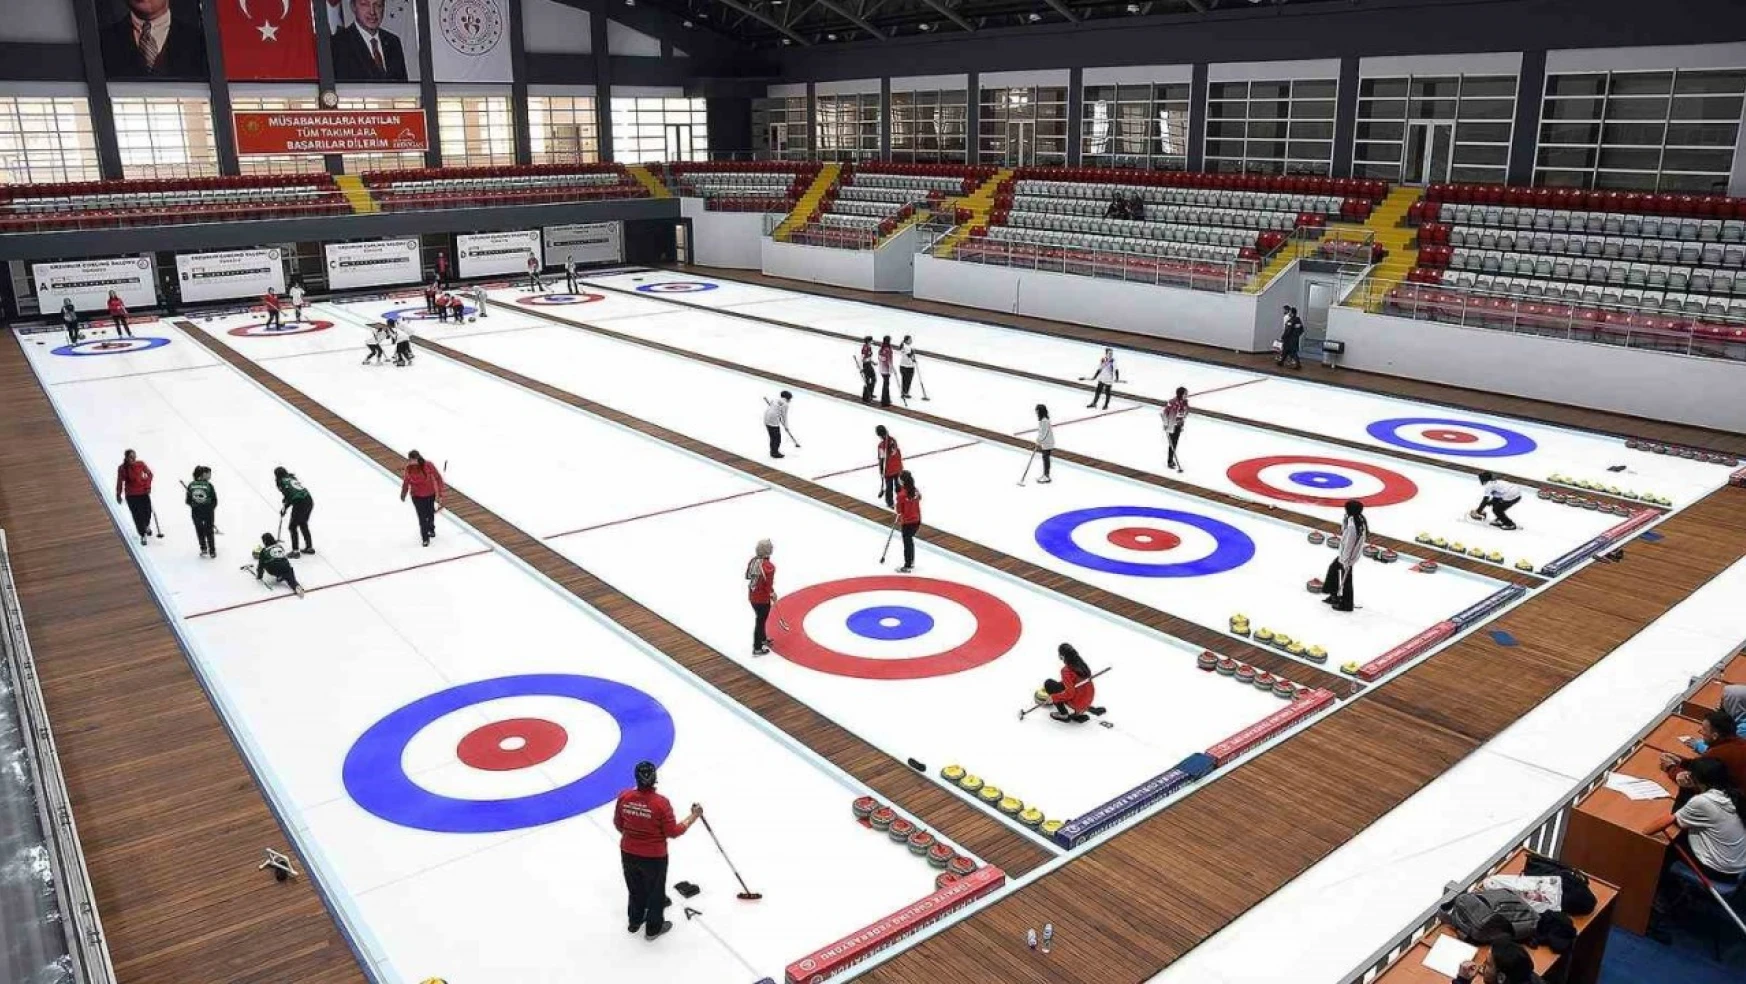 Erzurum'da Curling heyecanı